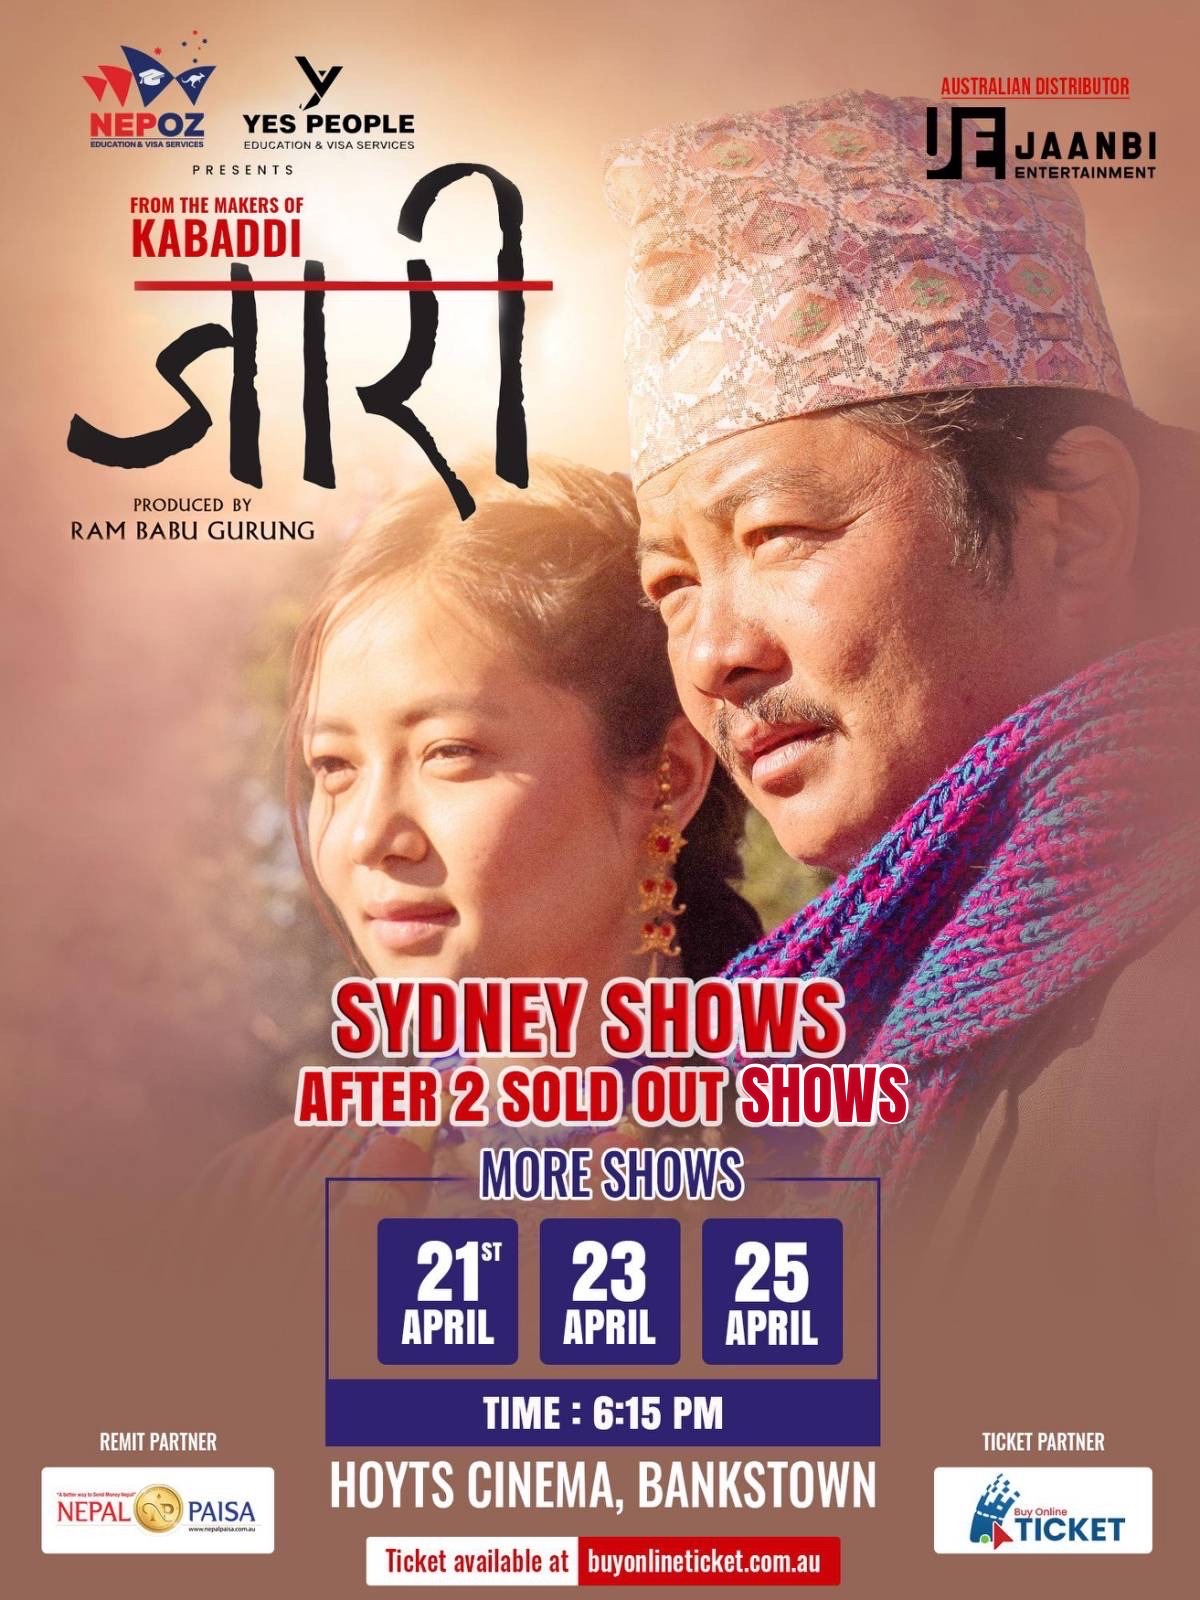 JAARI-Sydney 5th Show (ANZAC Day)